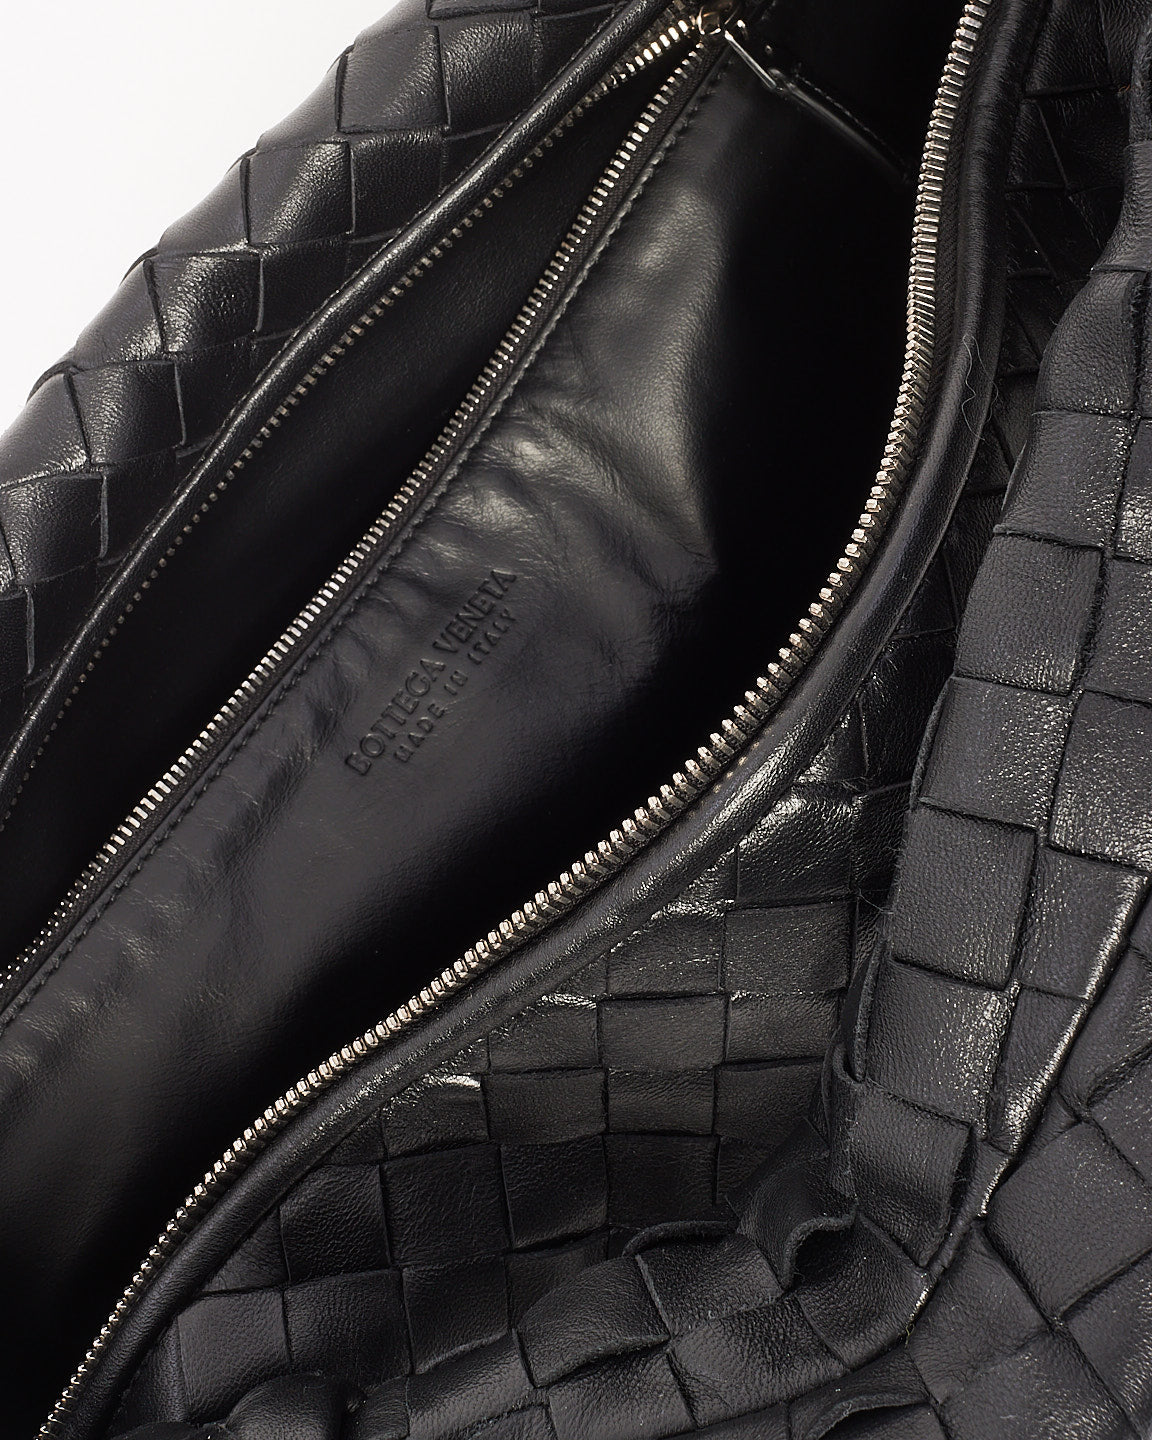 Bottega Veneta Black Intrecciato Leather Small Jodie Bag